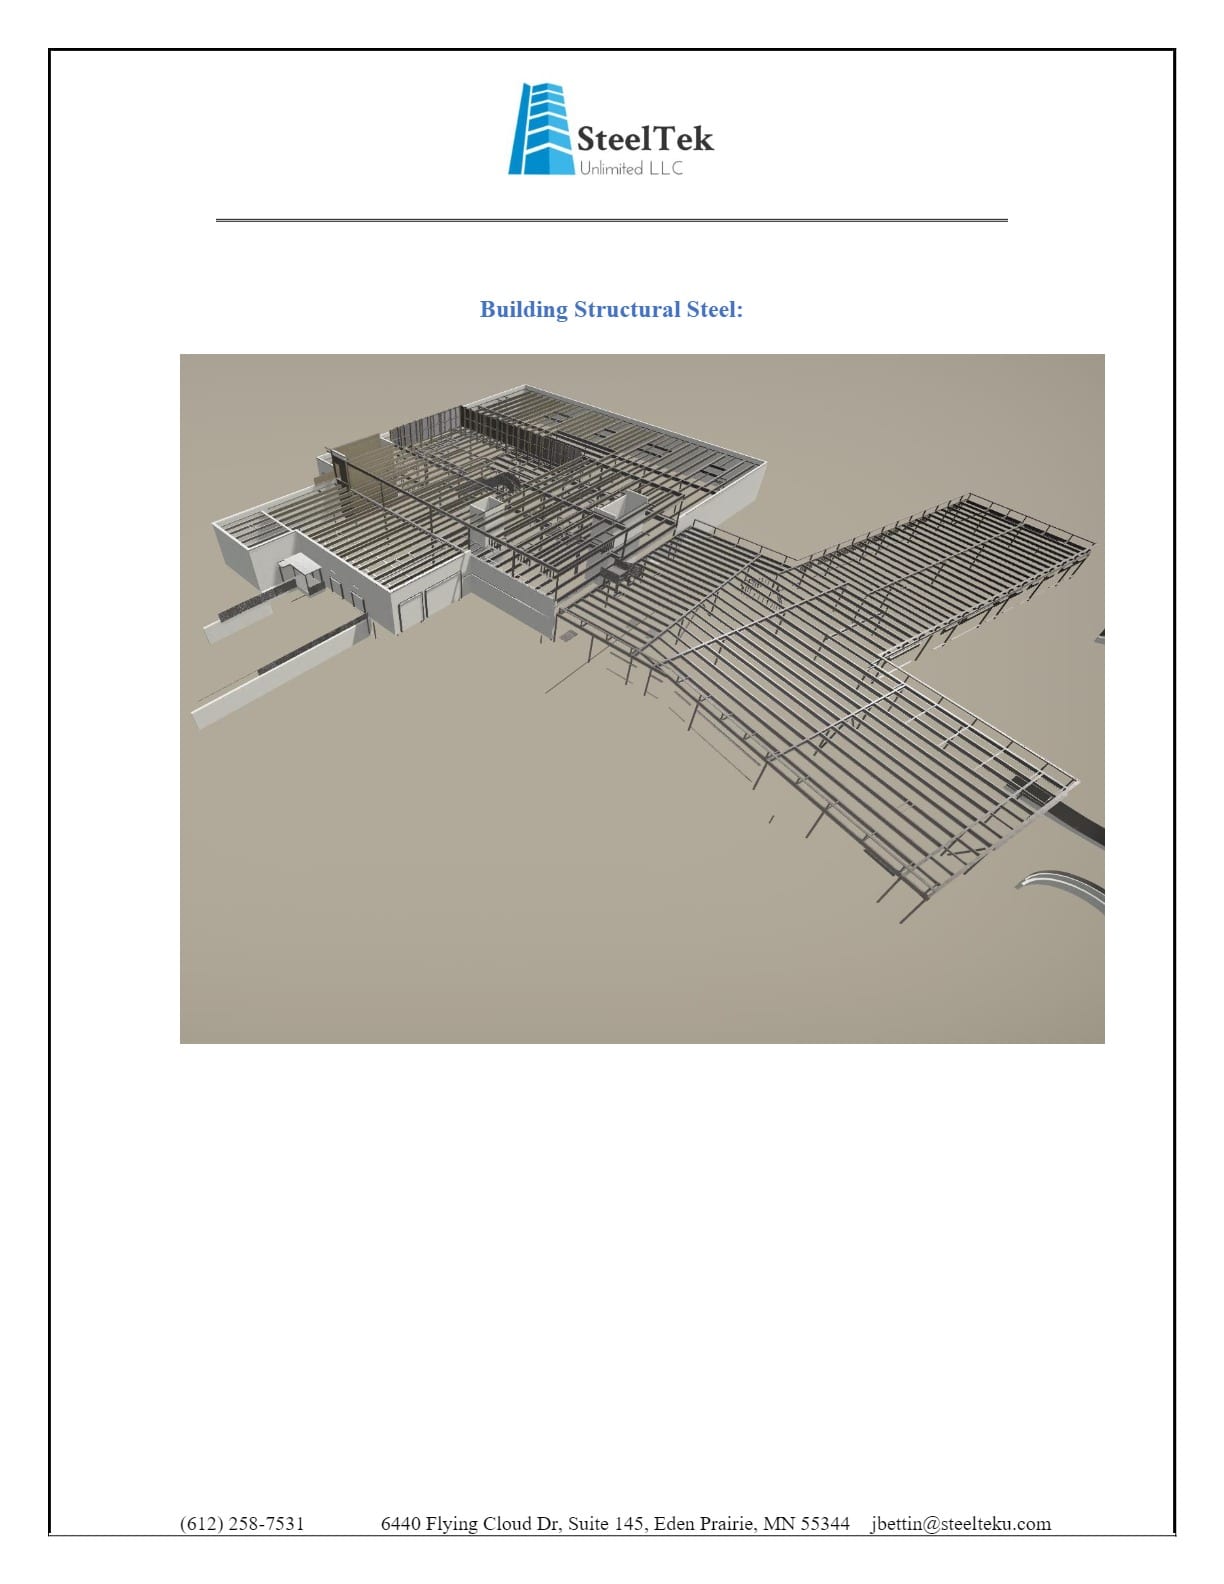 Steel Tek Unlimited 2021 AISC Brochure — Building Structural Steel